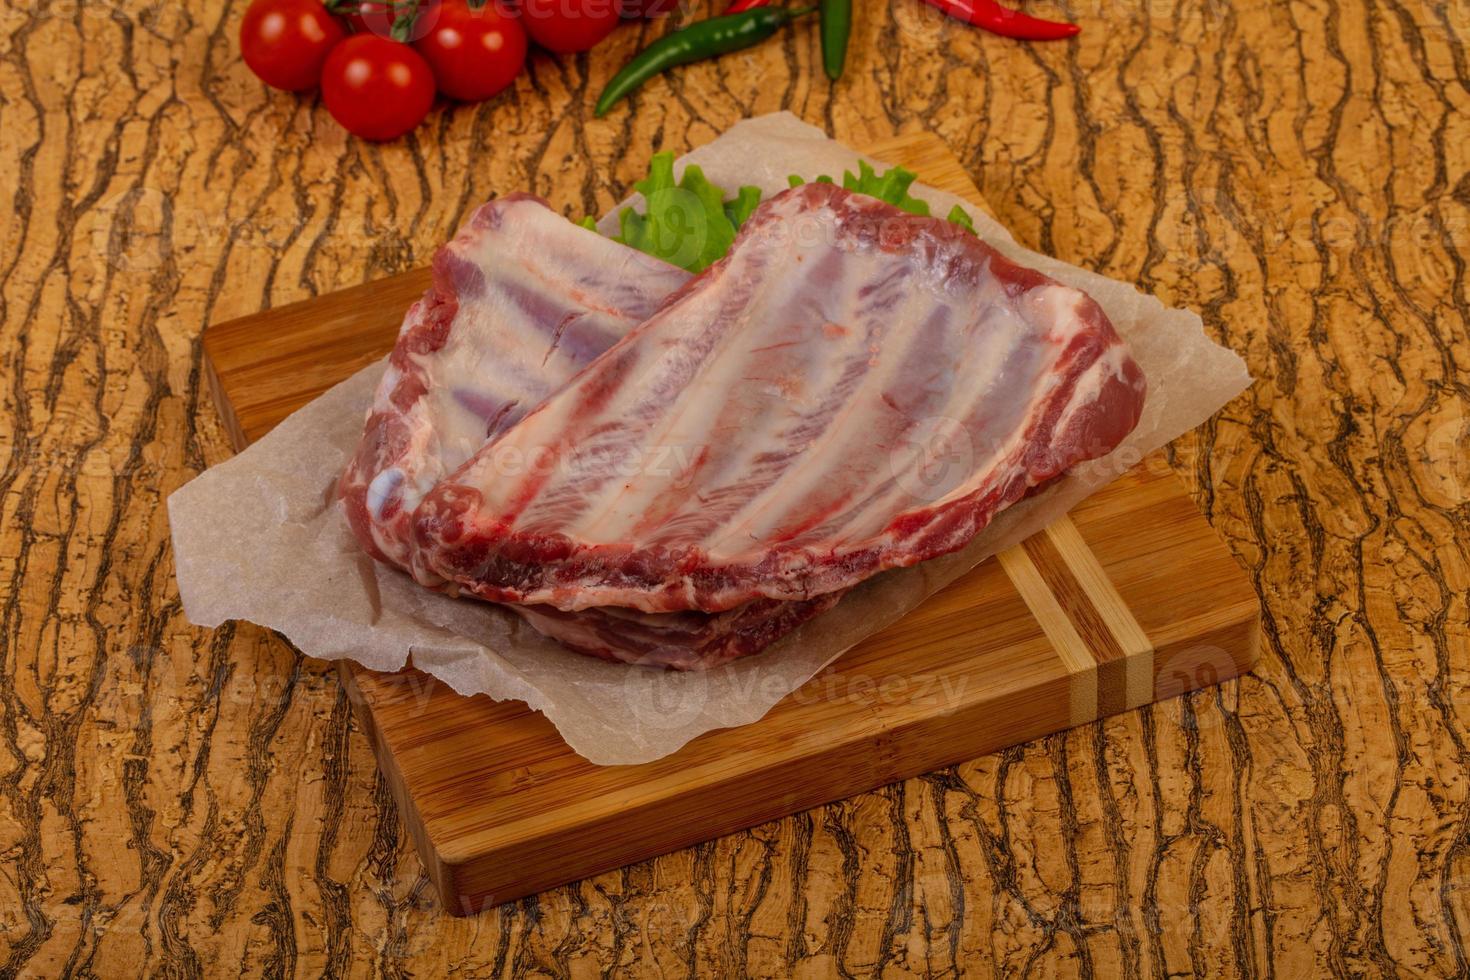 Raw pork ribs photo